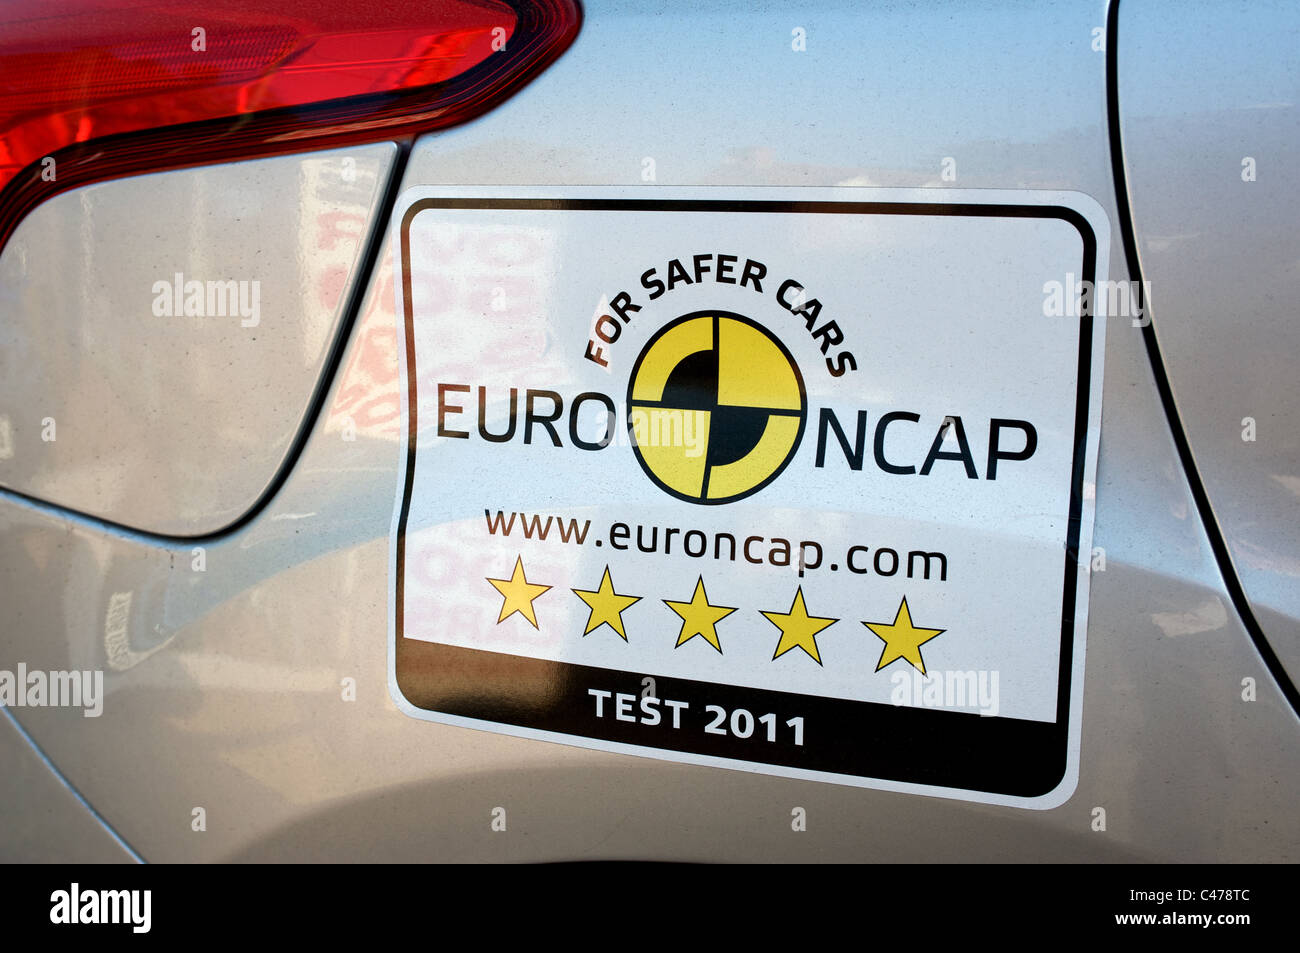 Euro Ncap 5 star 2011 sticker on a Ford Fiesta car Stock Photo